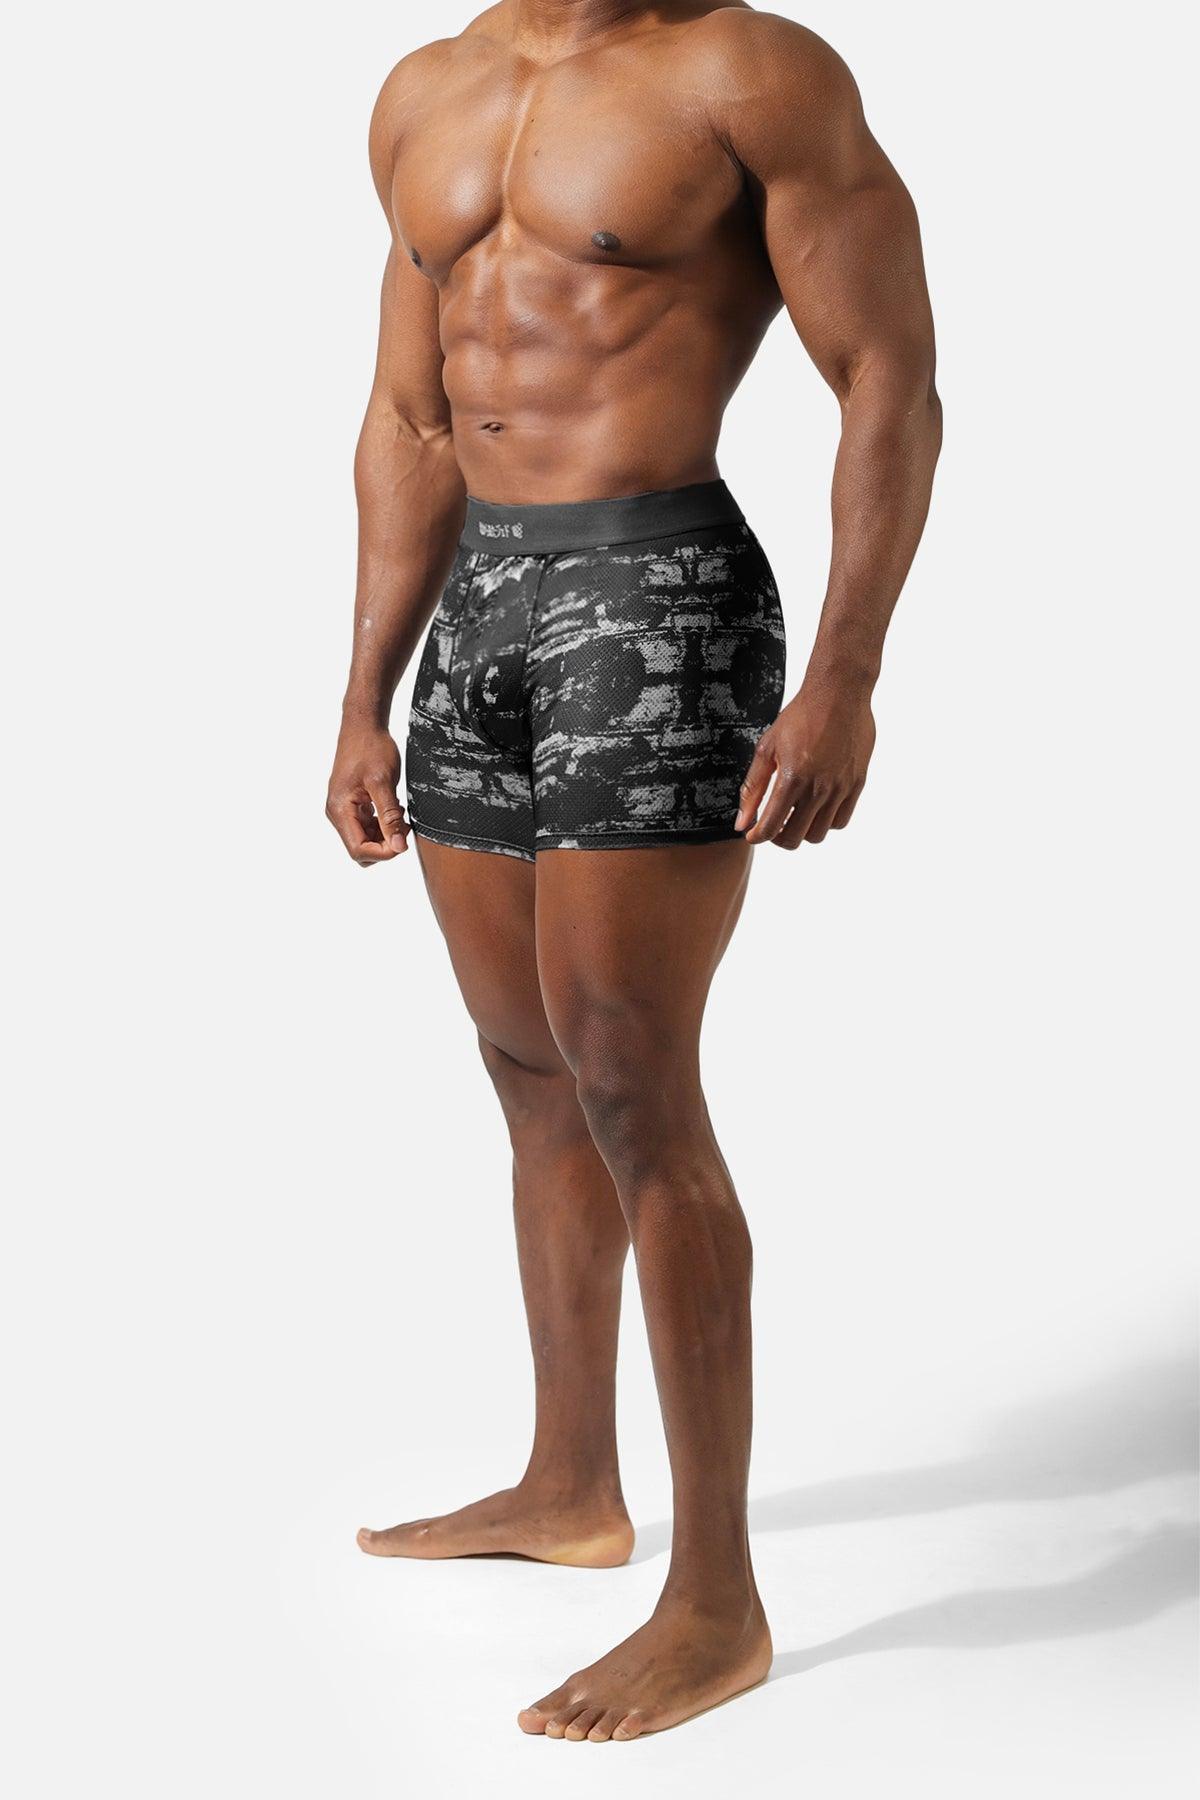 Men's Full Mesh Boxer Briefs 2 Pack - Black and Black Camo